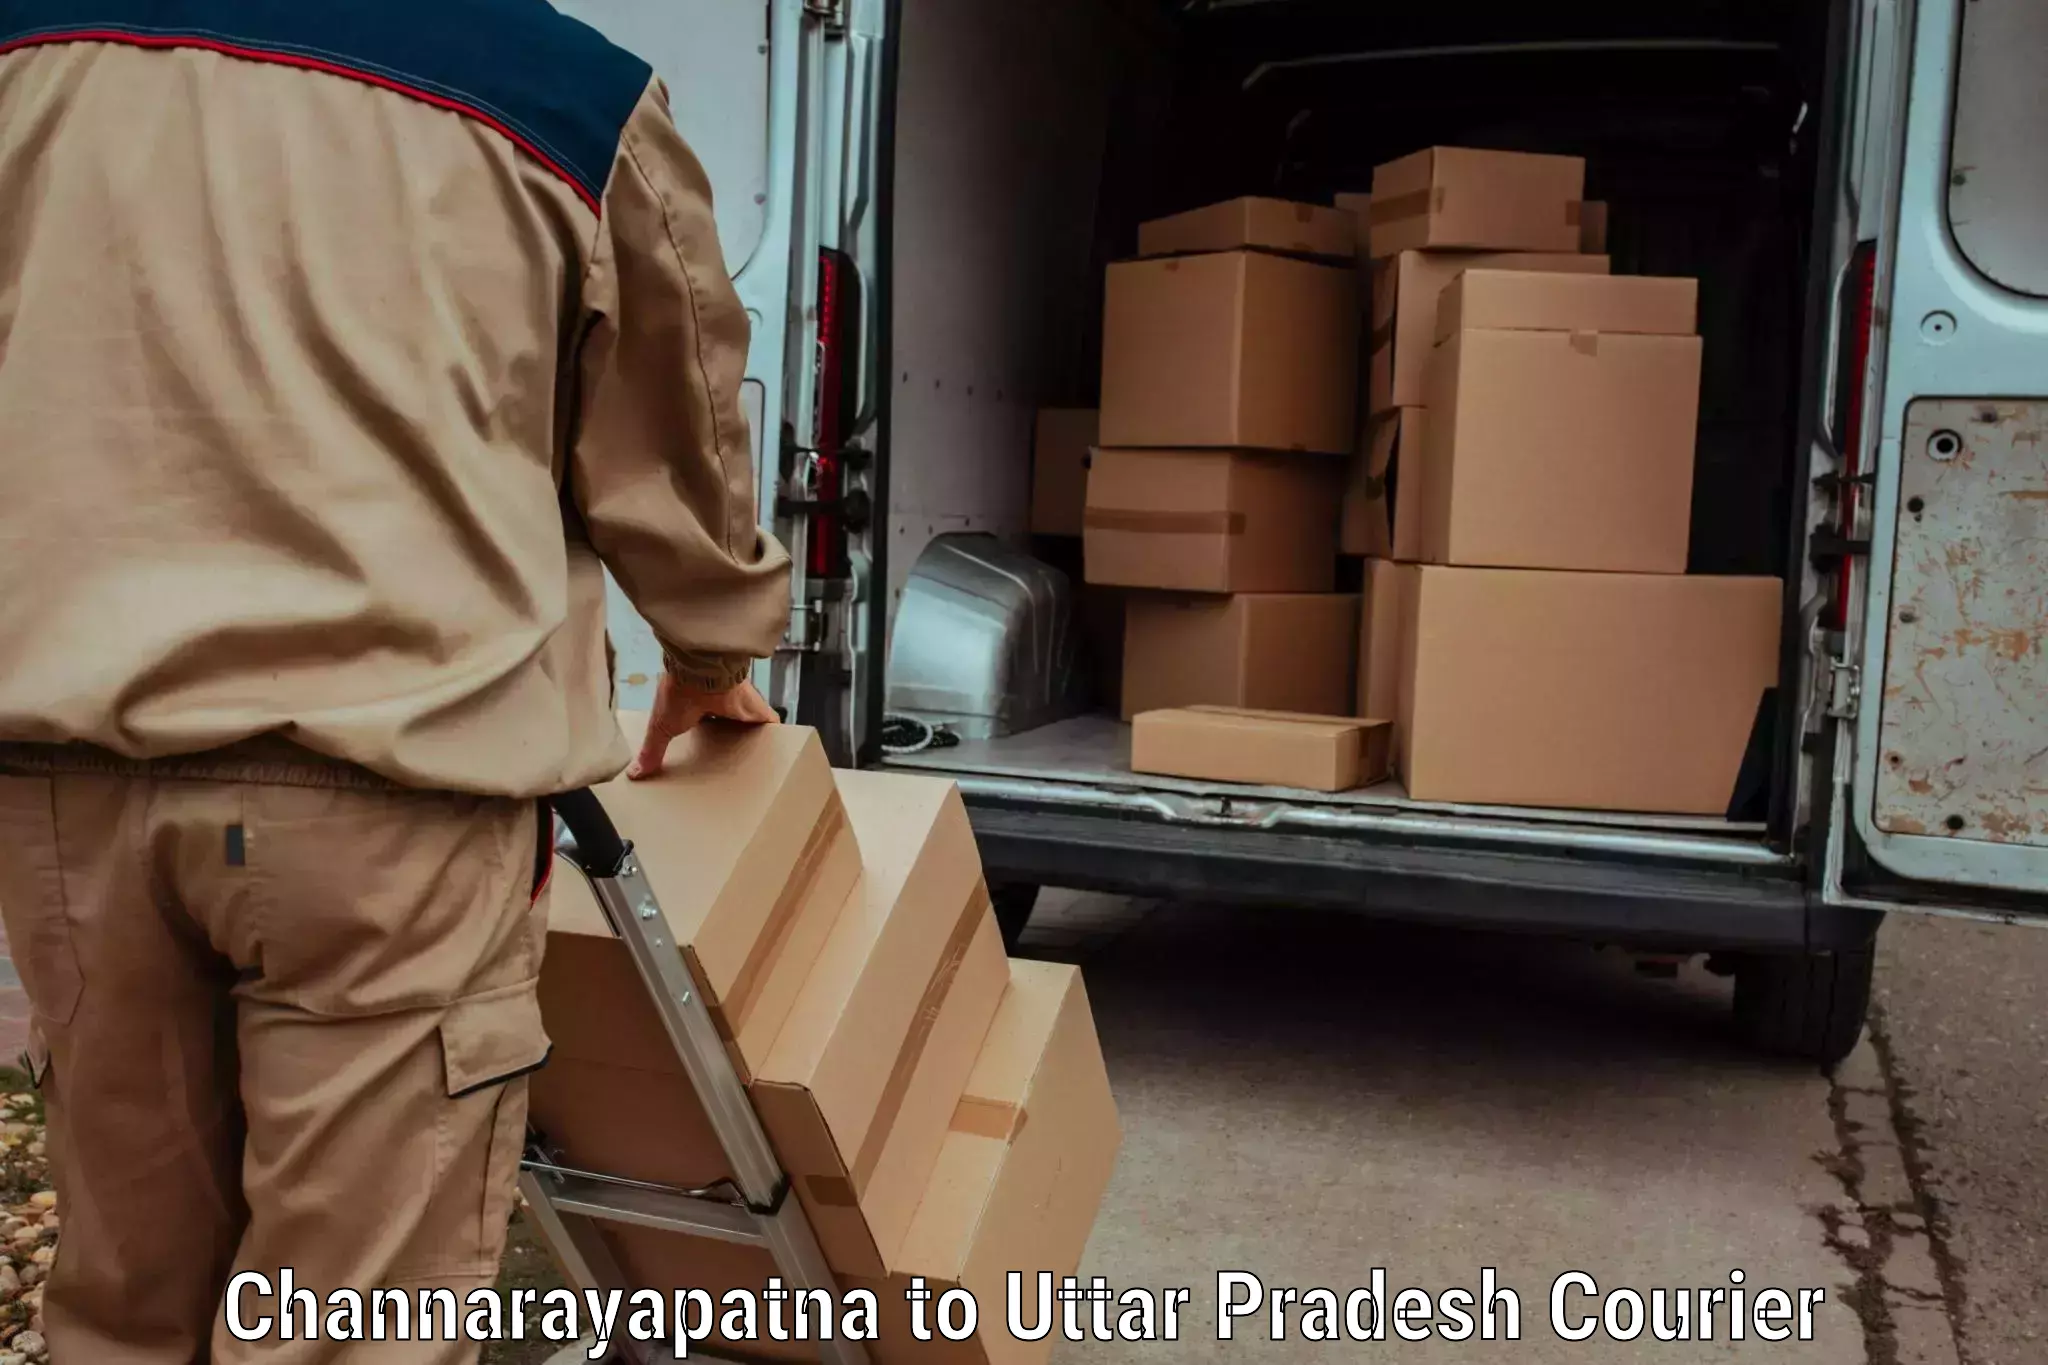 Luggage transport service in Channarayapatna to Uttar Pradesh